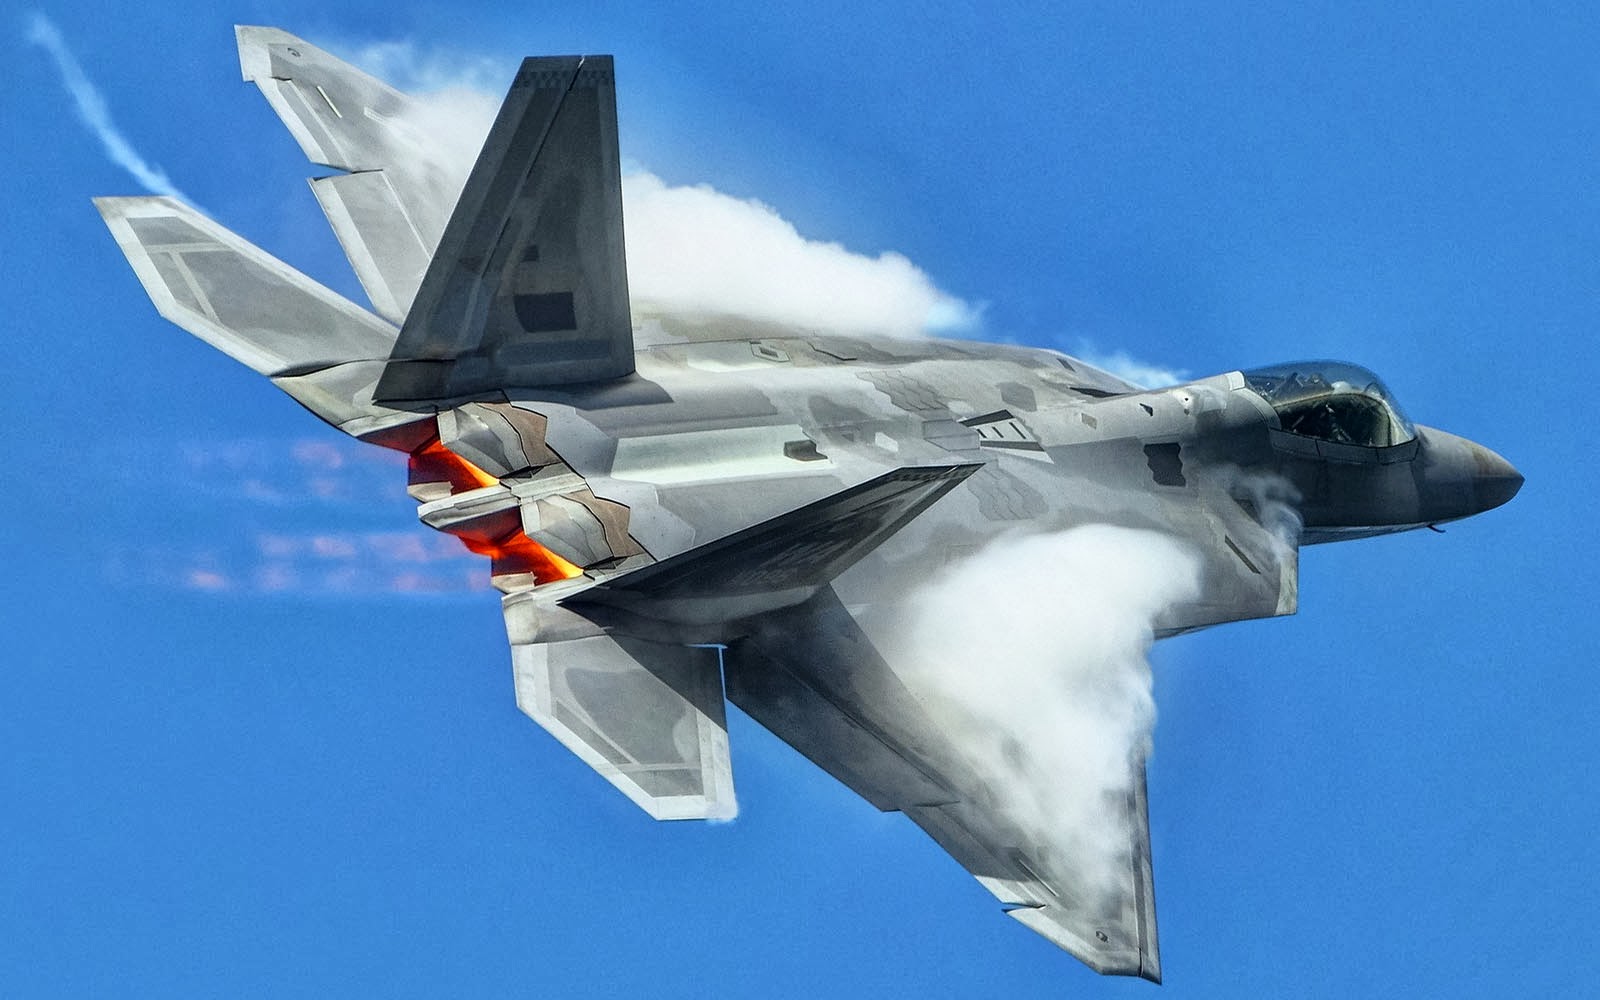 F-22 Raptor - Fighter Jet Wallpapers | Defence Forum & Military Photos -  DefenceTalk